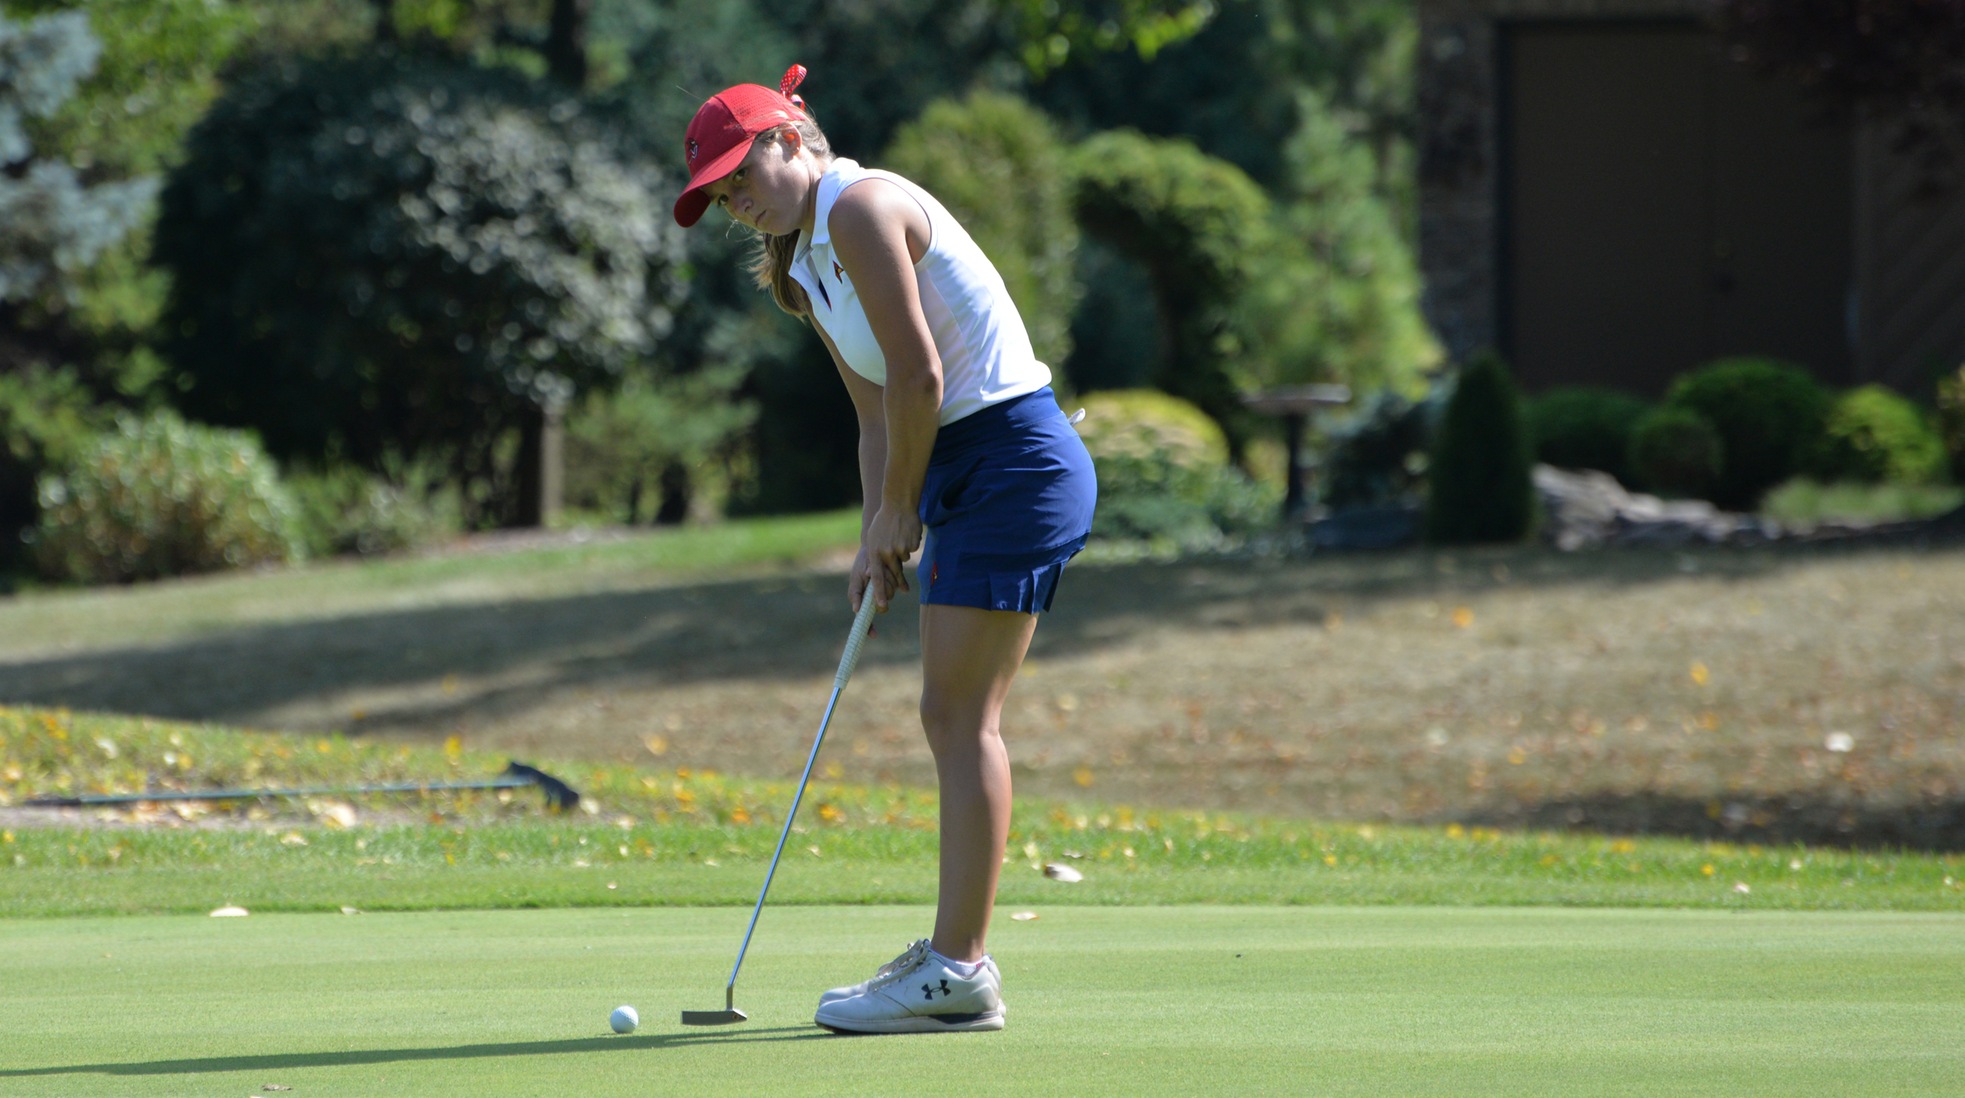 Emily Barker named GLIAC Women's Golfer of the Week